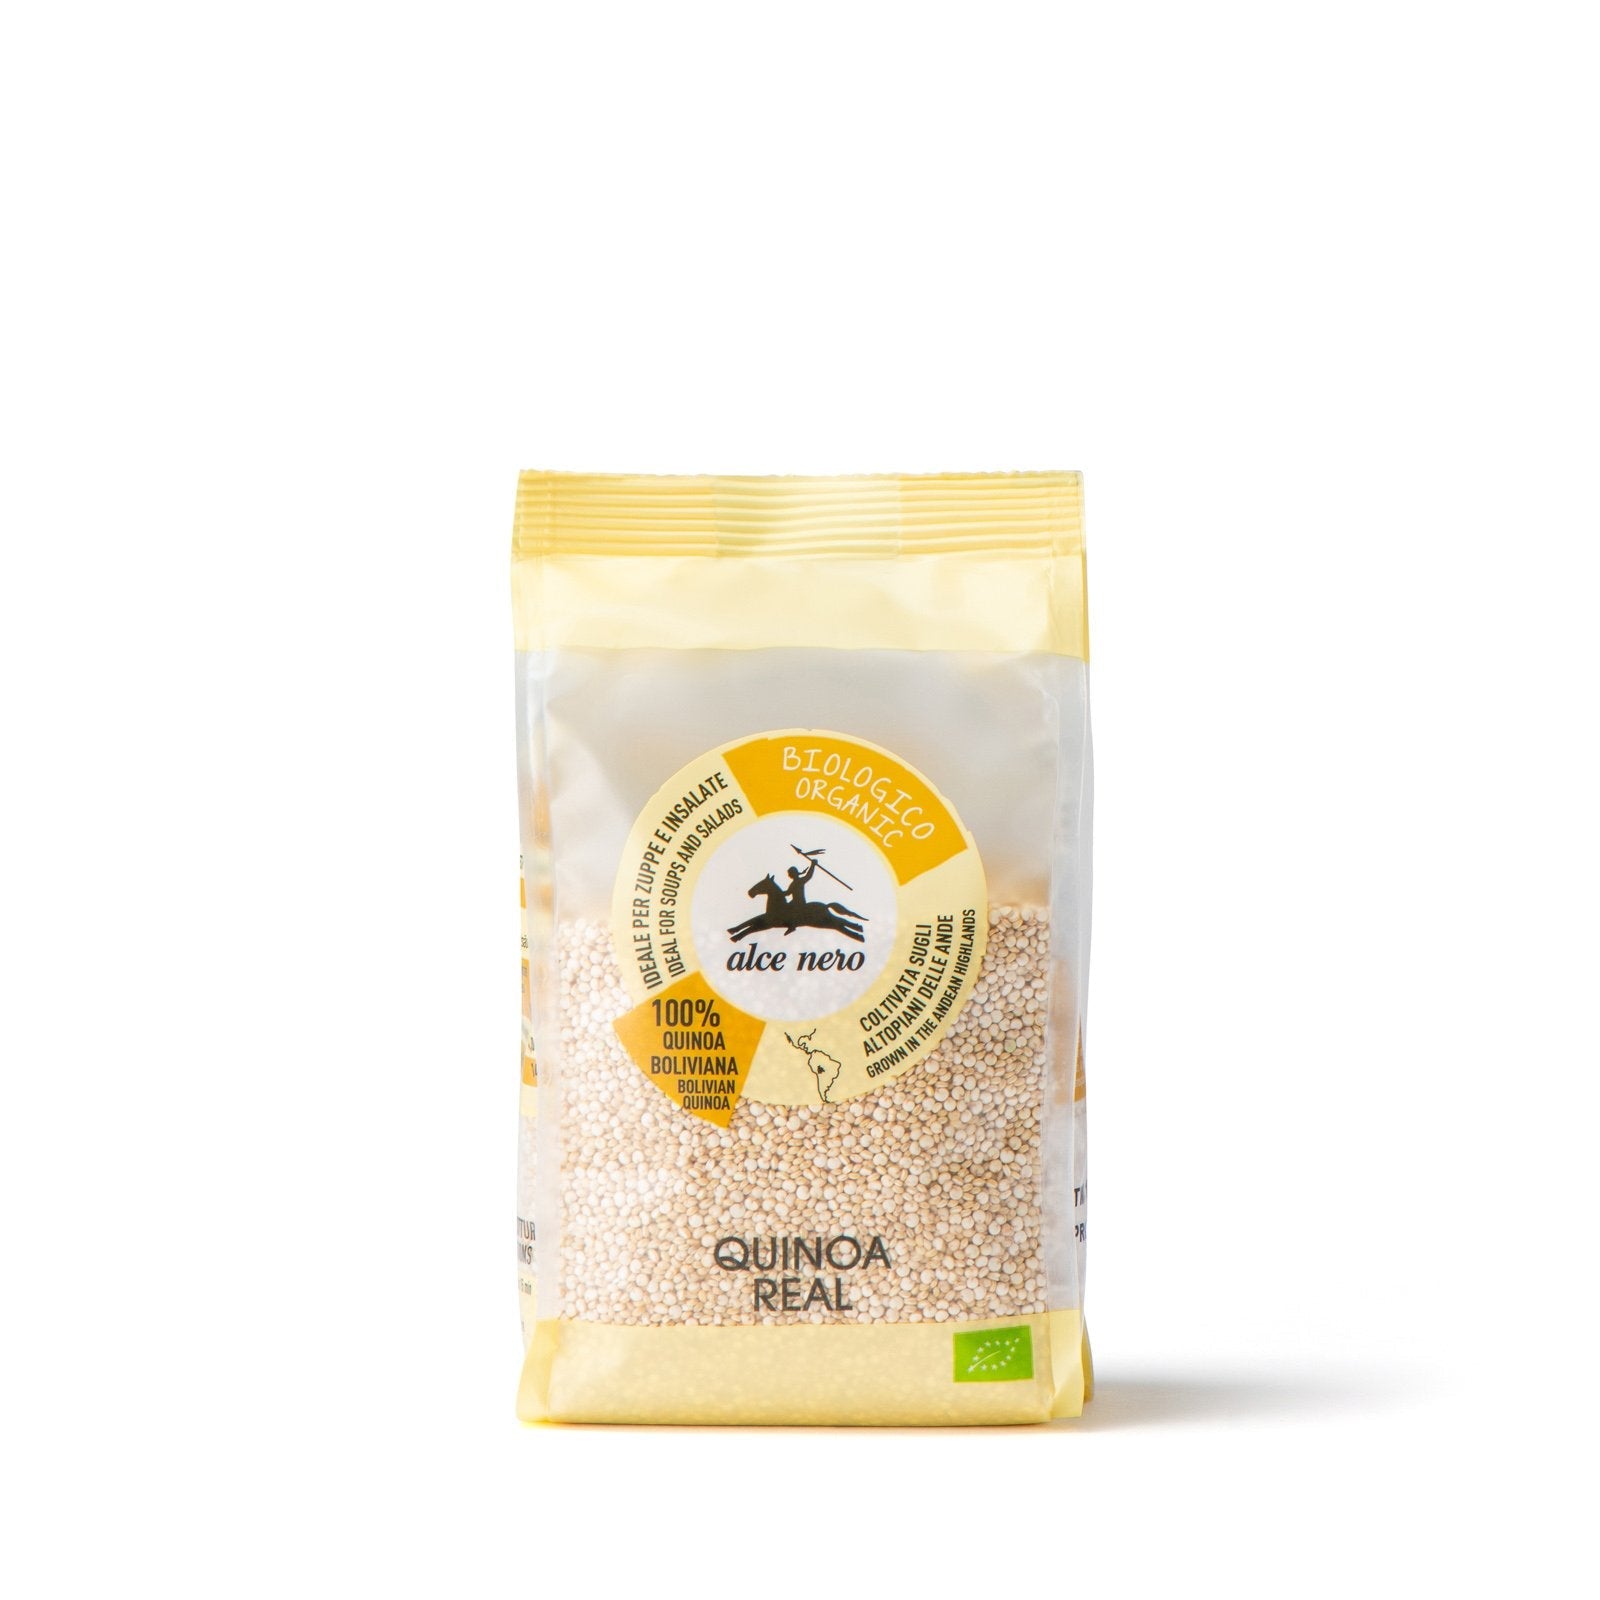 Quinoa Real biologique - CE462